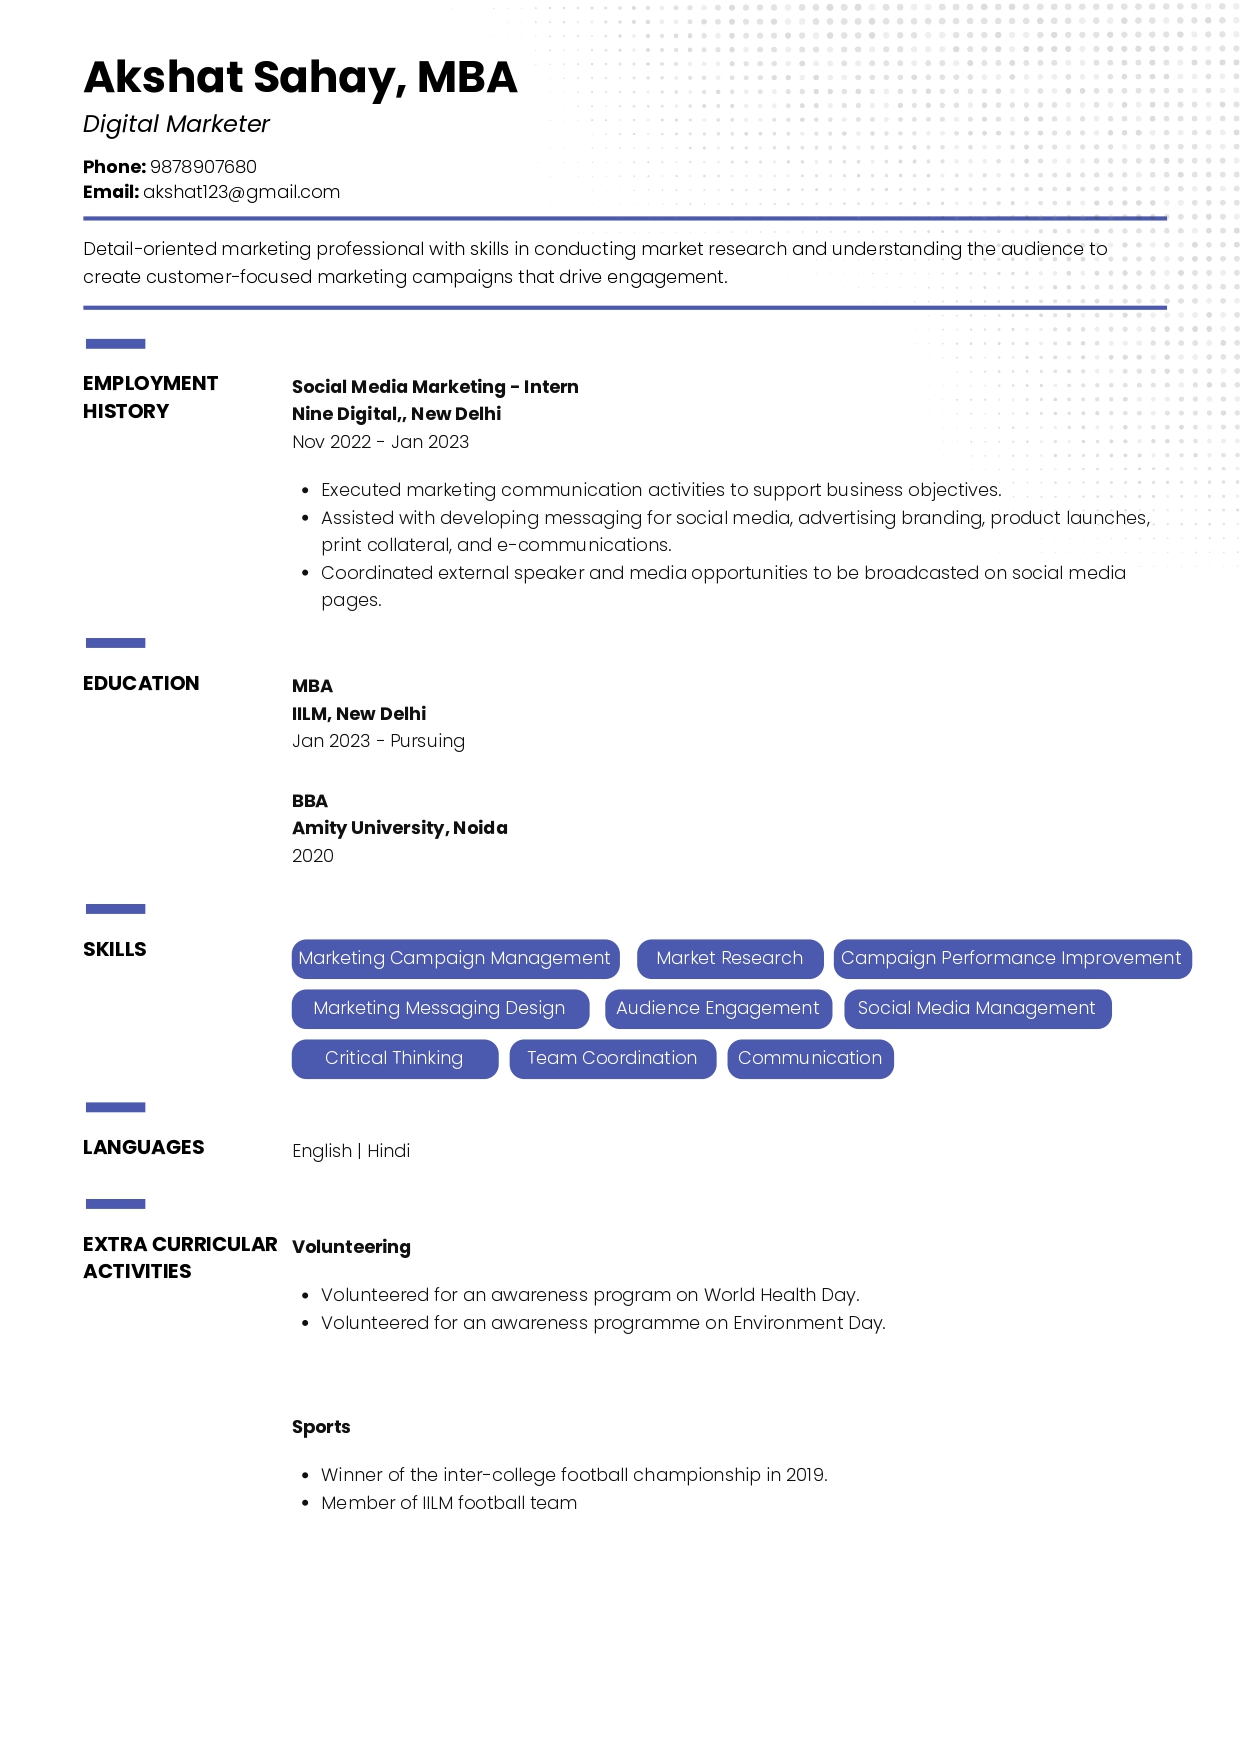 Sample Resume of Digital Marketer | Free Resume Templates & Samples on Resumod.co